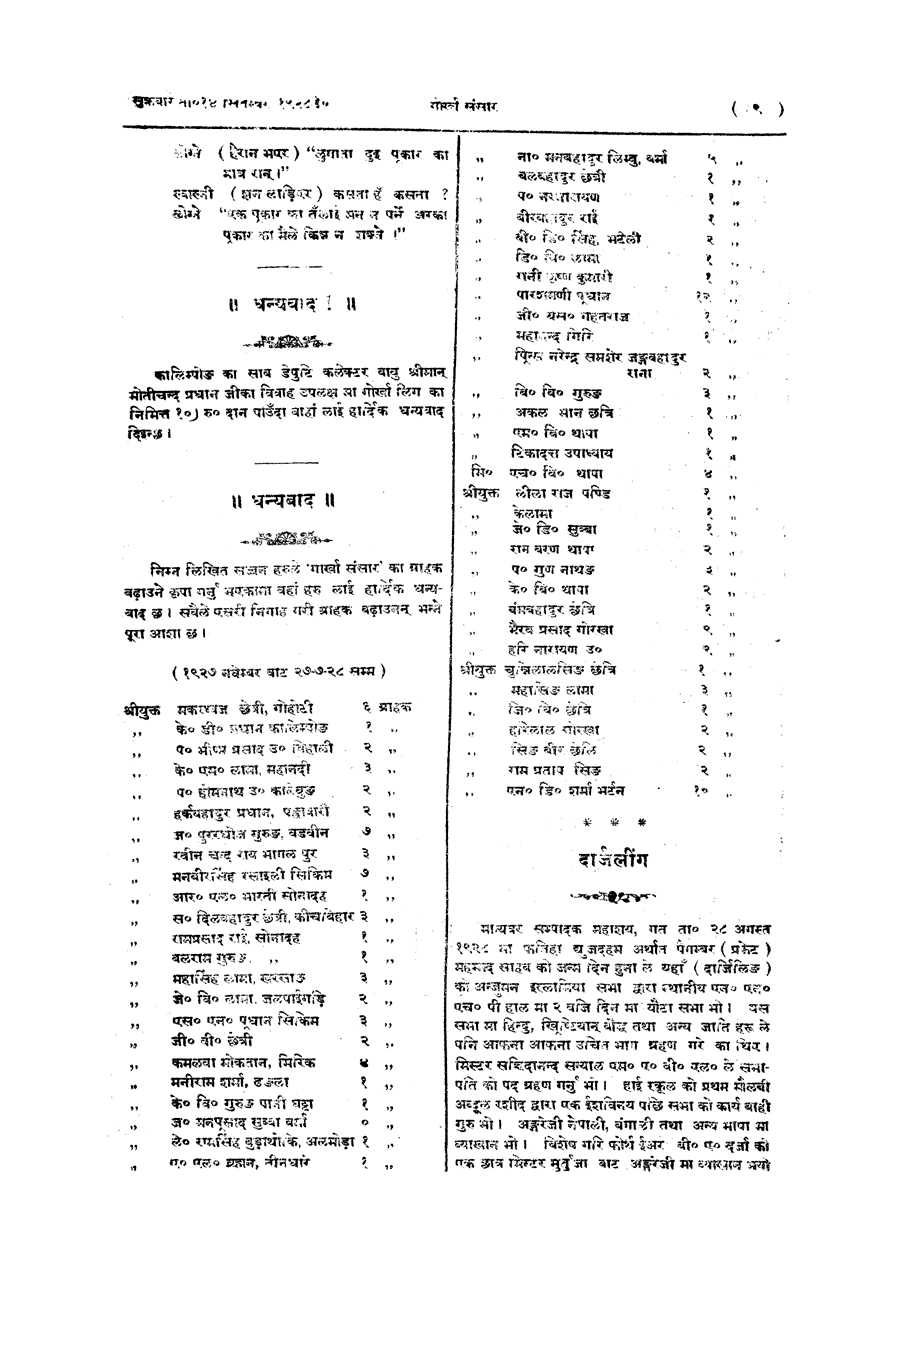 Gorkha Sansar, 14 Sept 1928, page 9